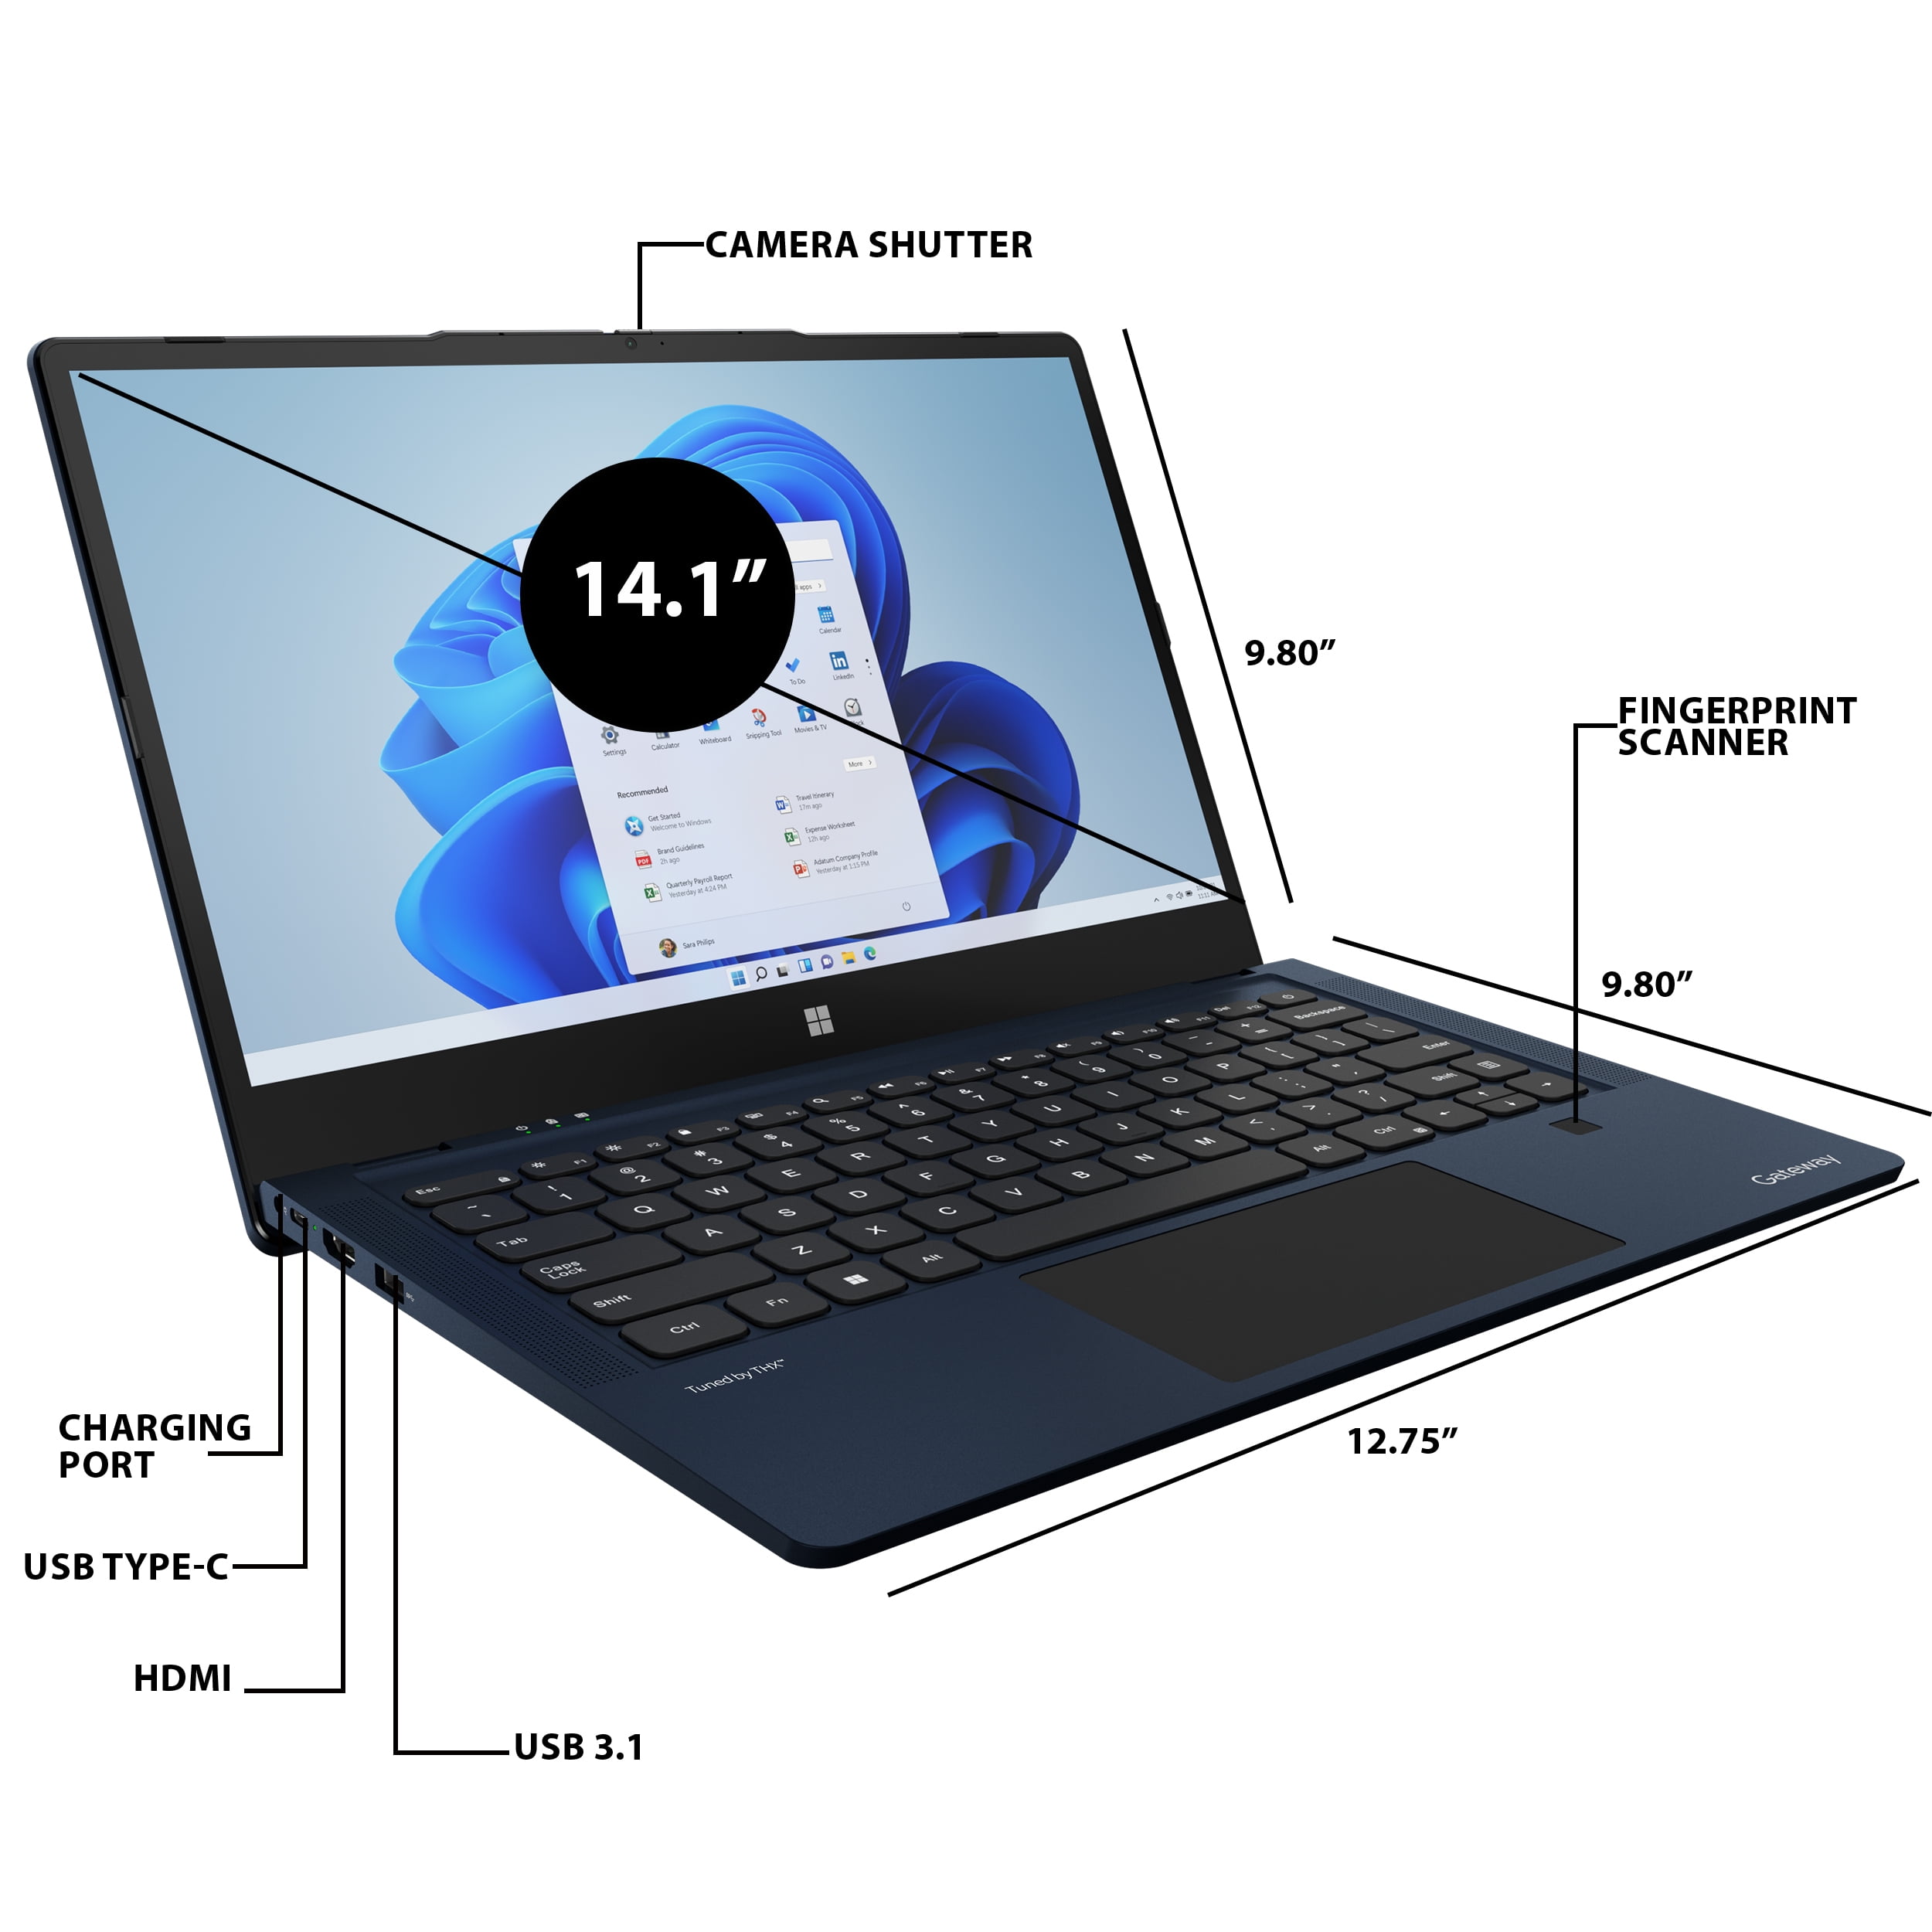 Gateway .1" Ultra Slim Notebook, FHD Touchscreen, Intel Core i7